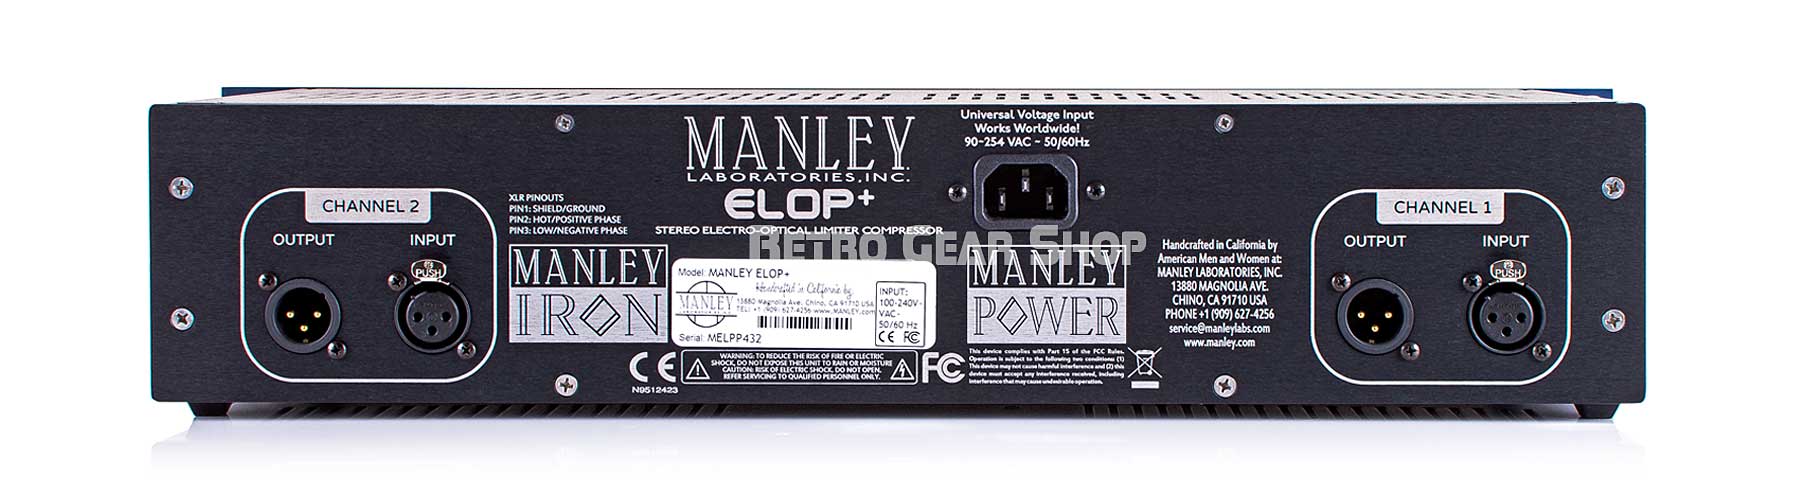 Manley Laboratories Elop+ Rear